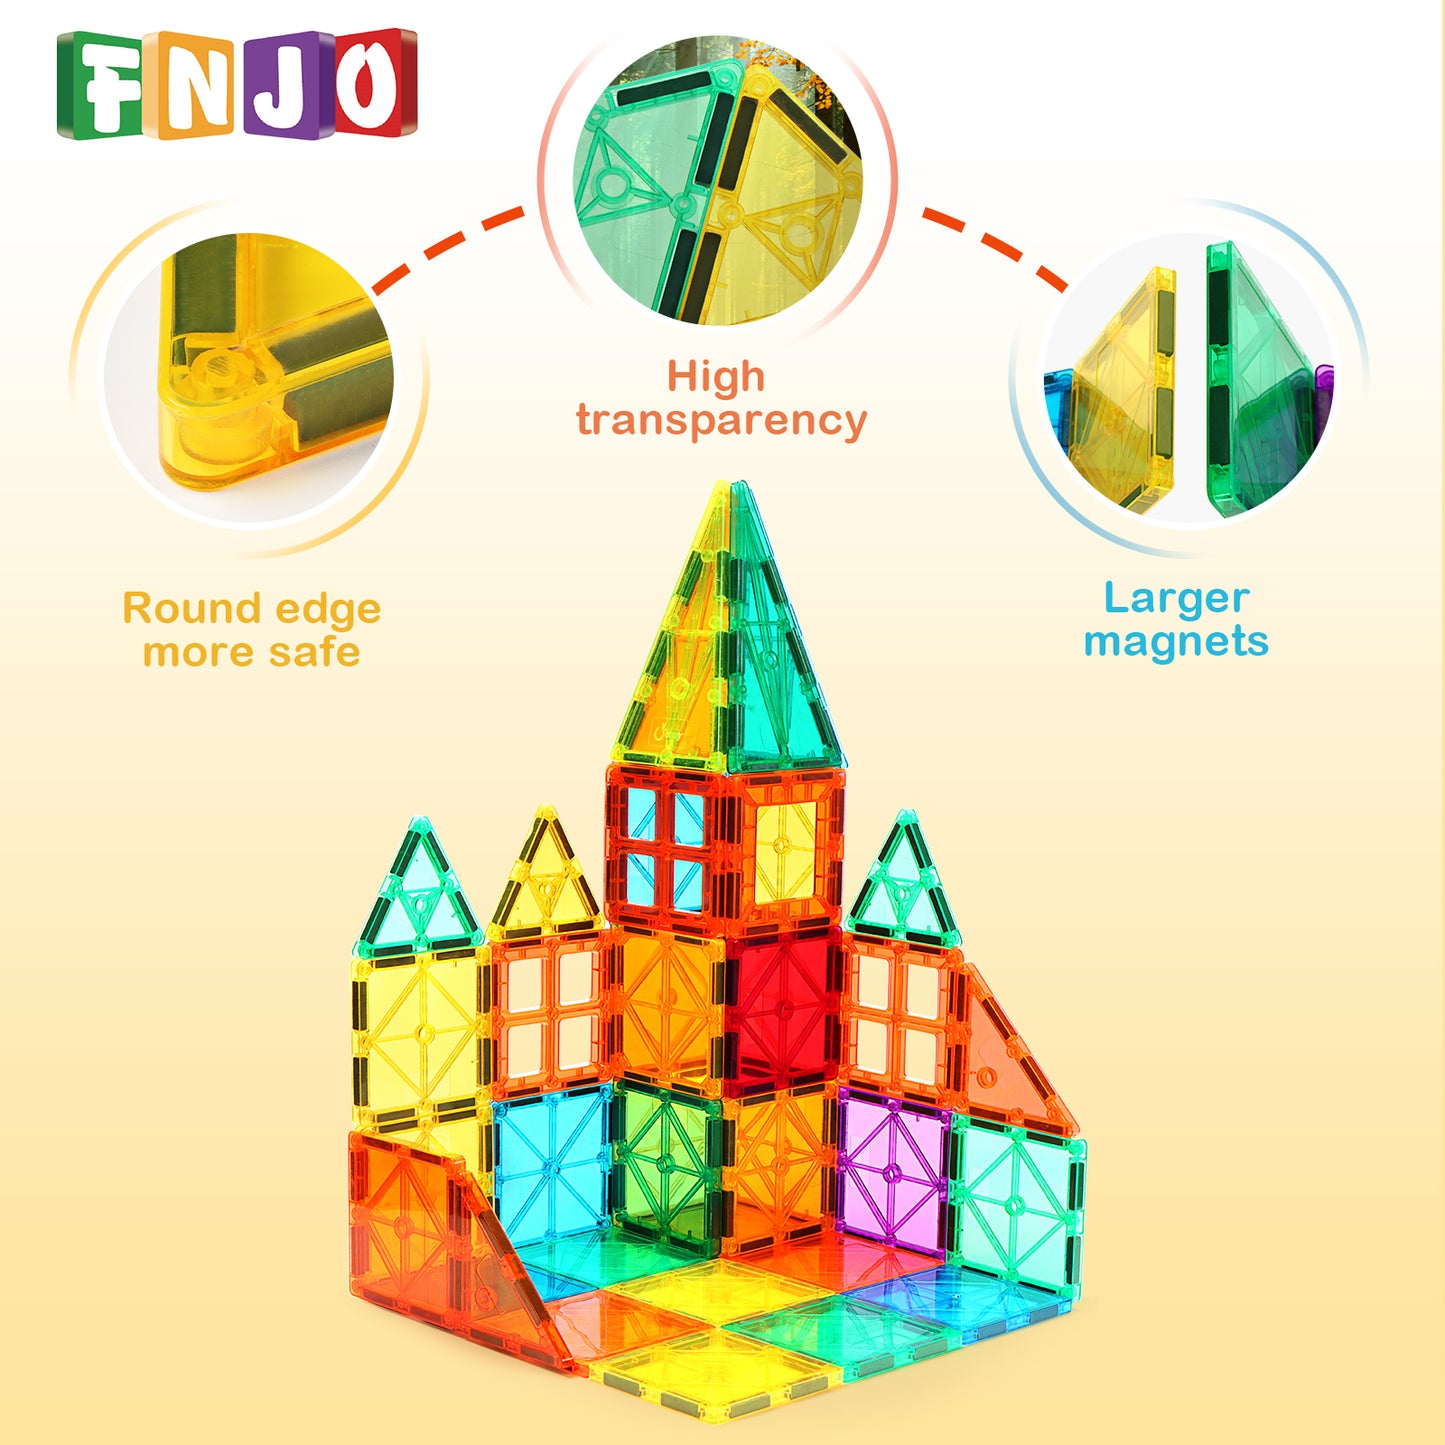 FNJO Magnetic Tiles, Magnet Building Set,60 PCS Building Blocks Set STEM Preschool Montessori Toy for Kids Boys Girls